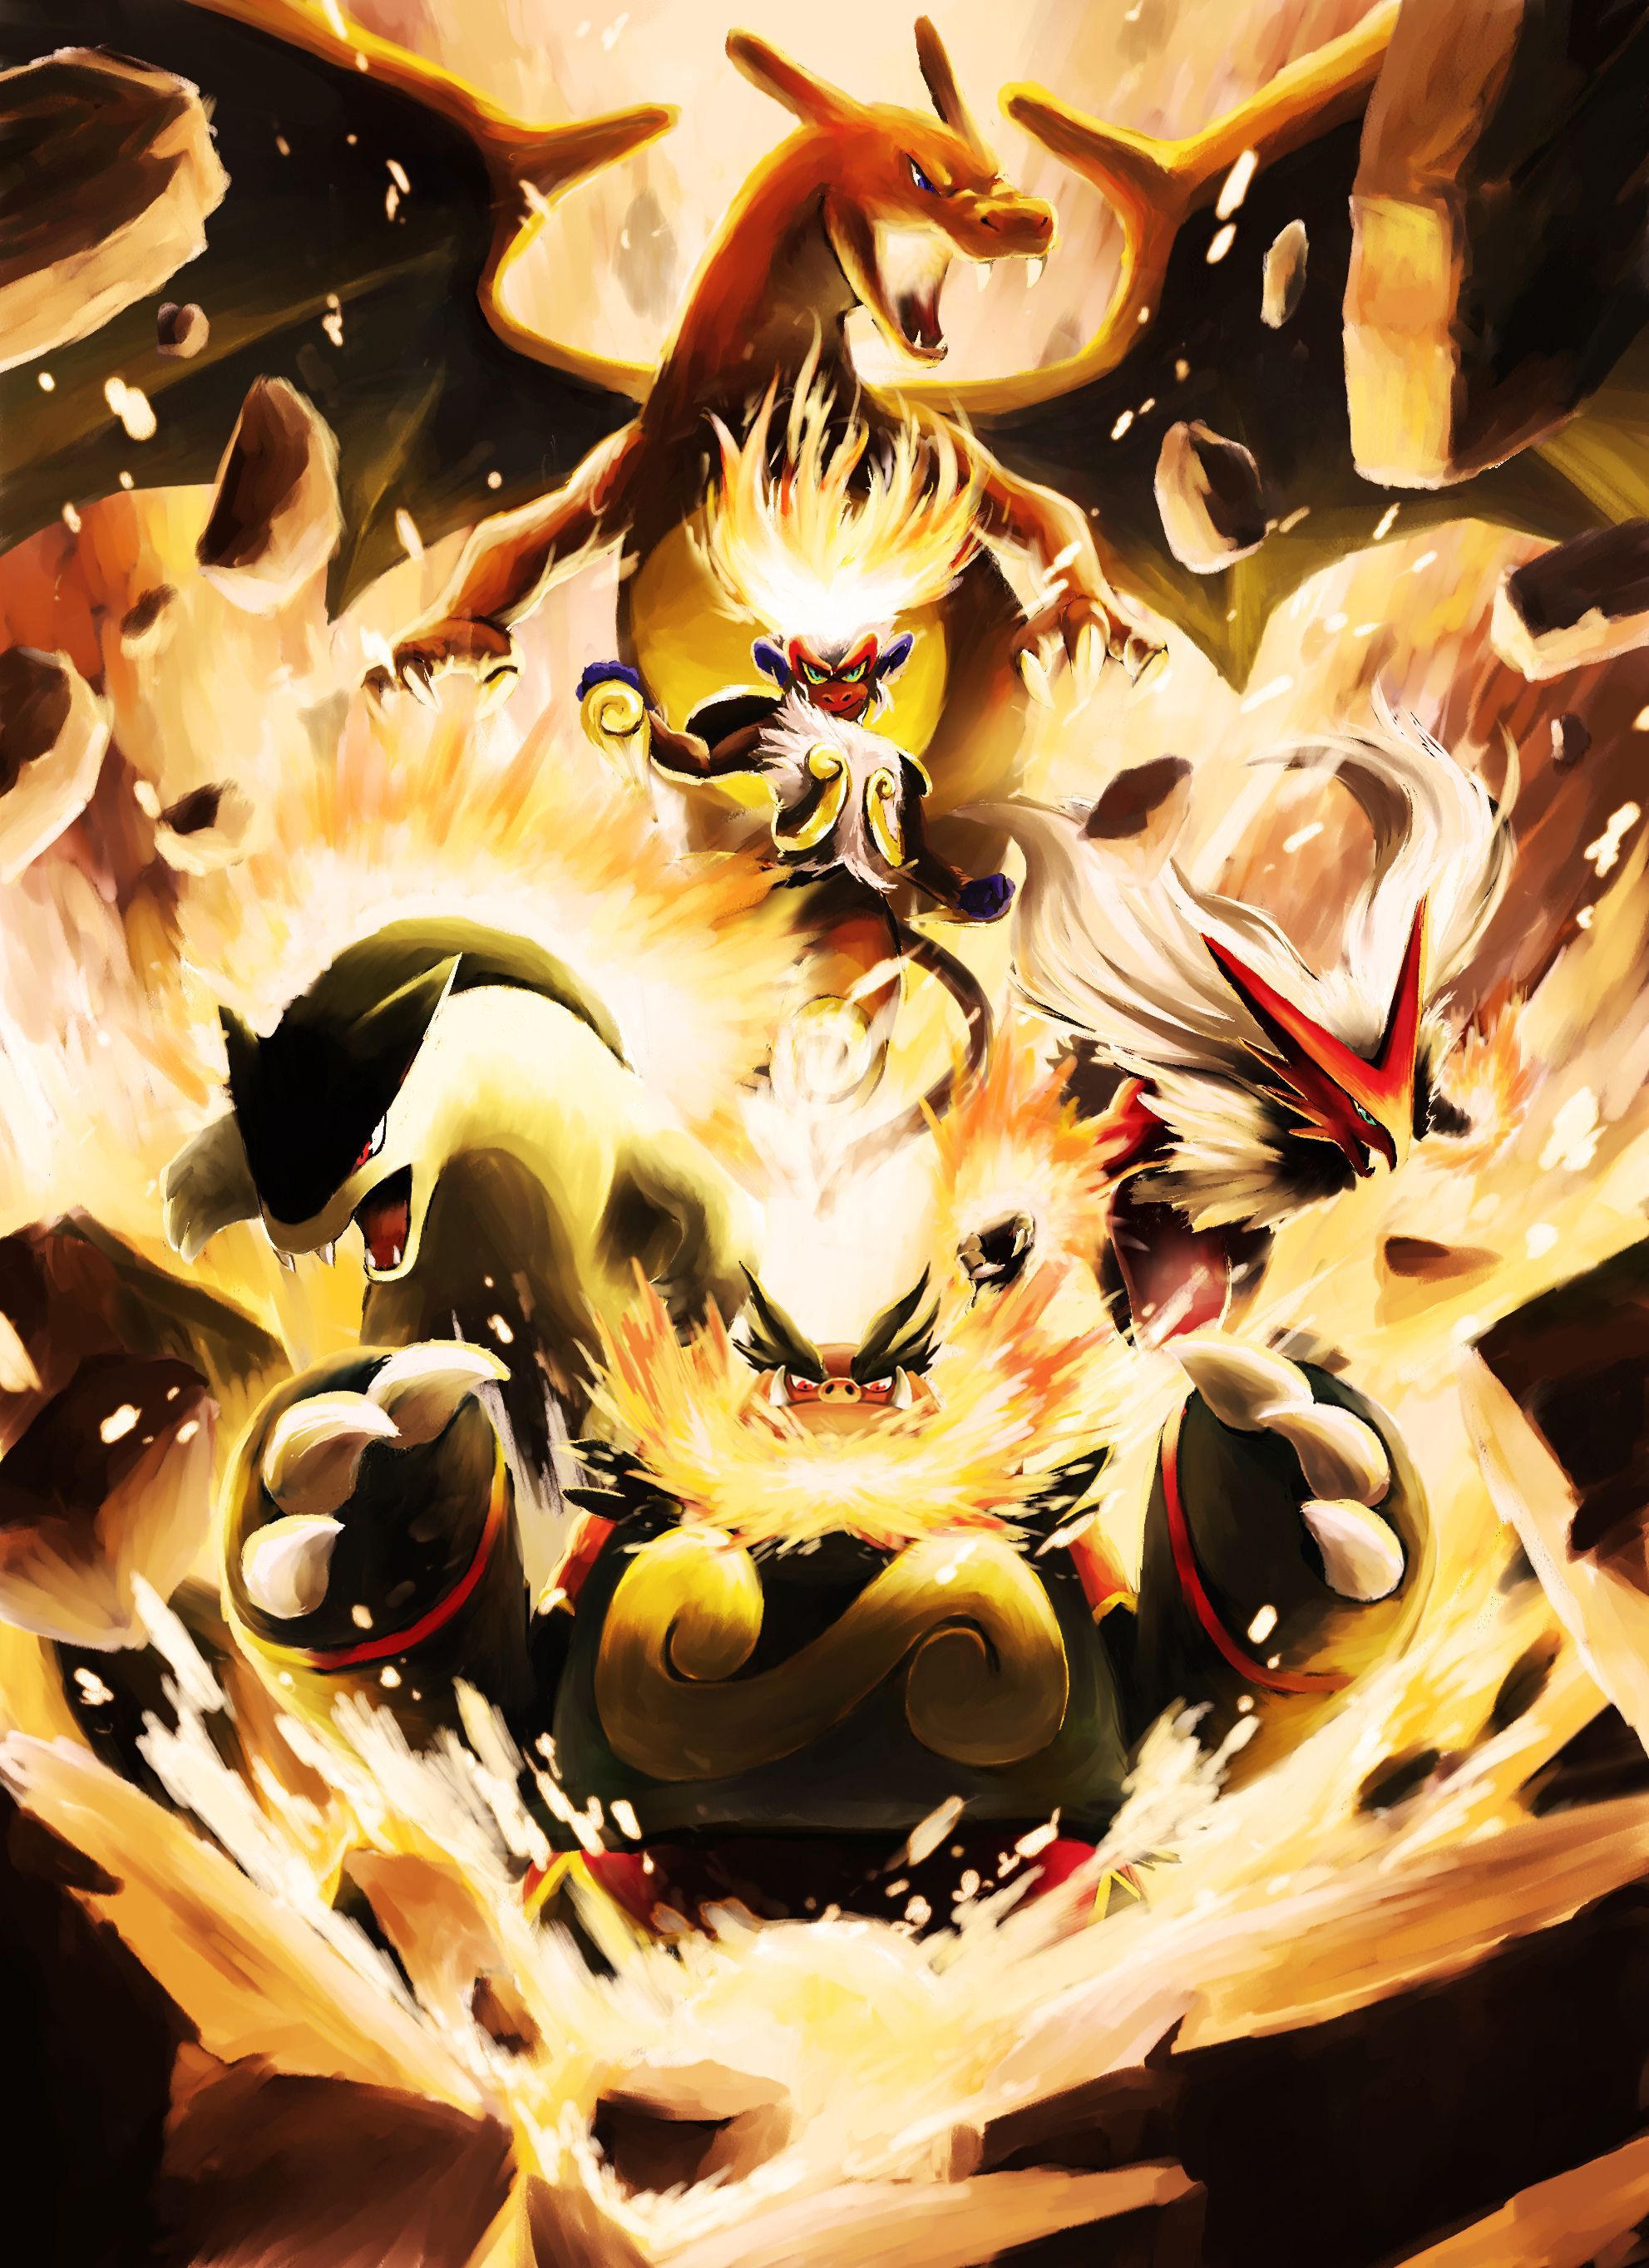 Fire Type Pokemon Starters. Pokemon, Fire Type Pokémon, Pokemon Starters